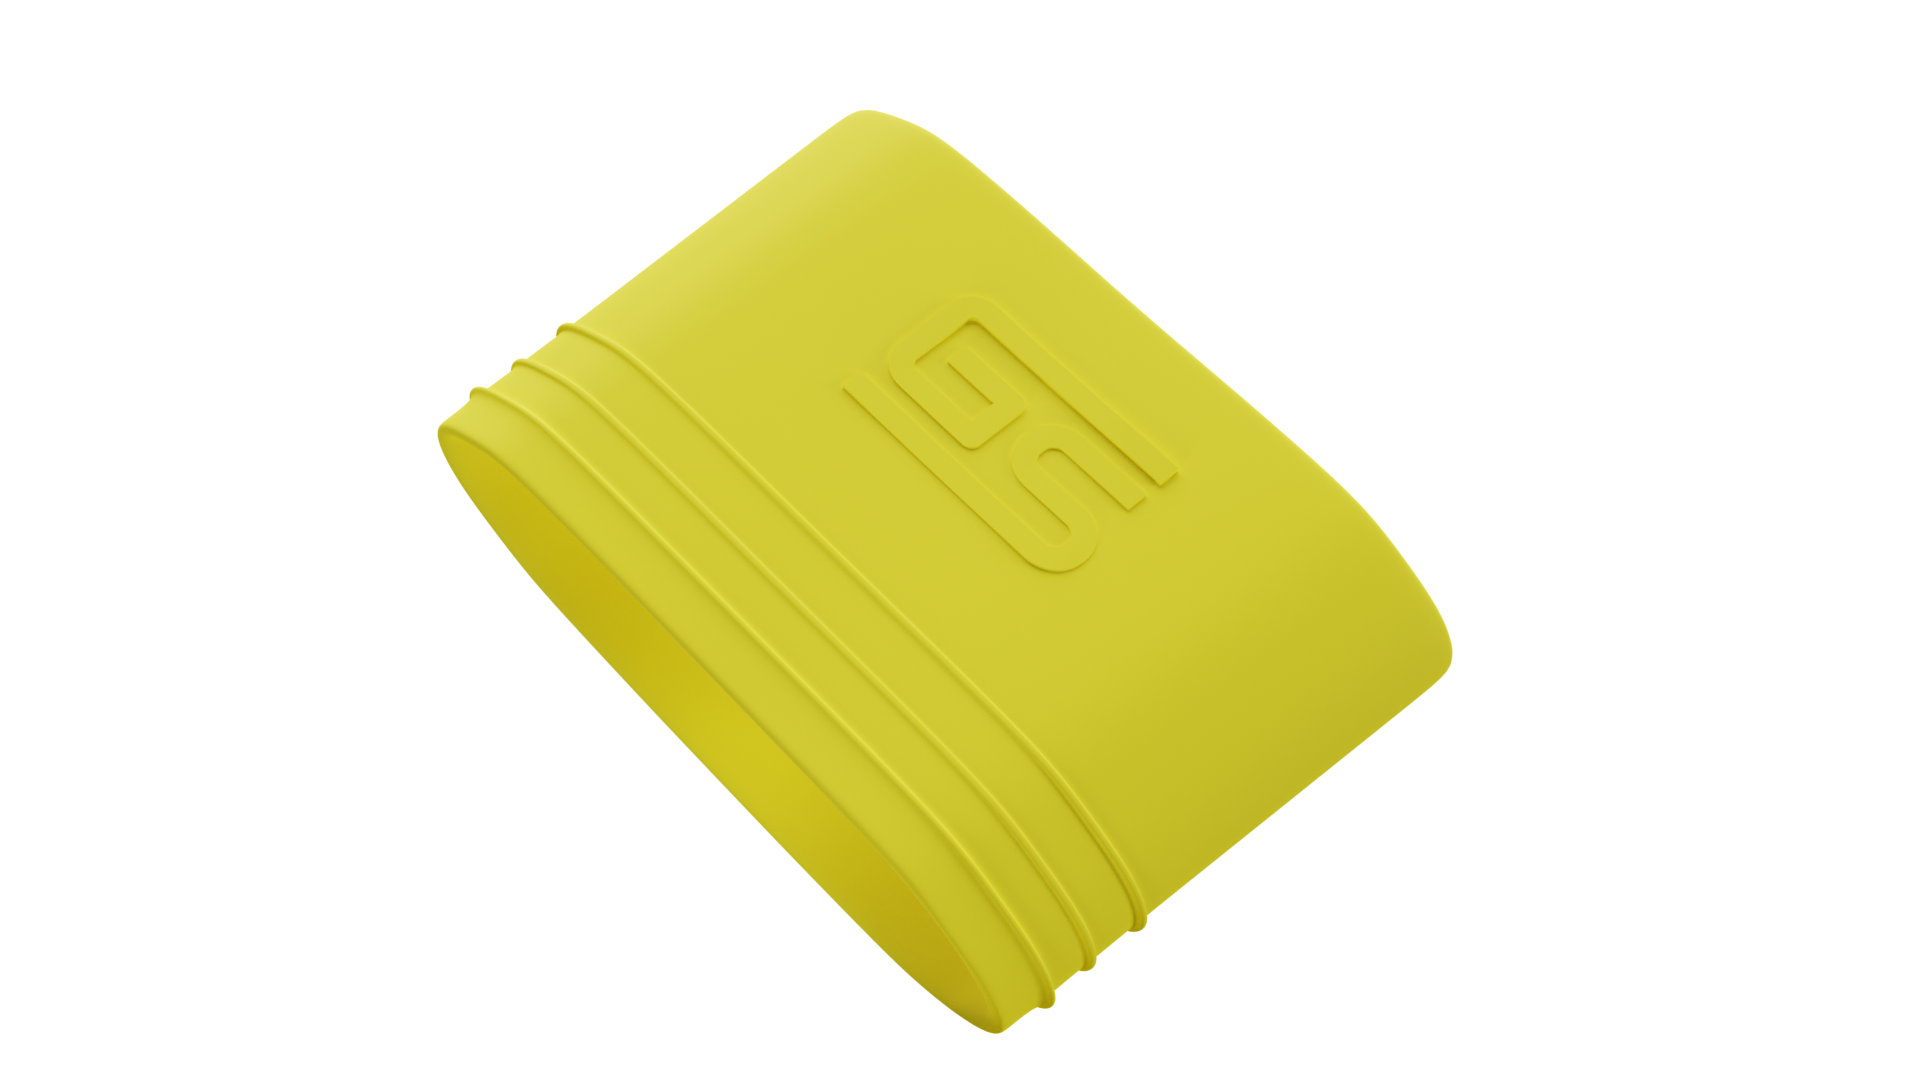 Gstrap's (yellow) 